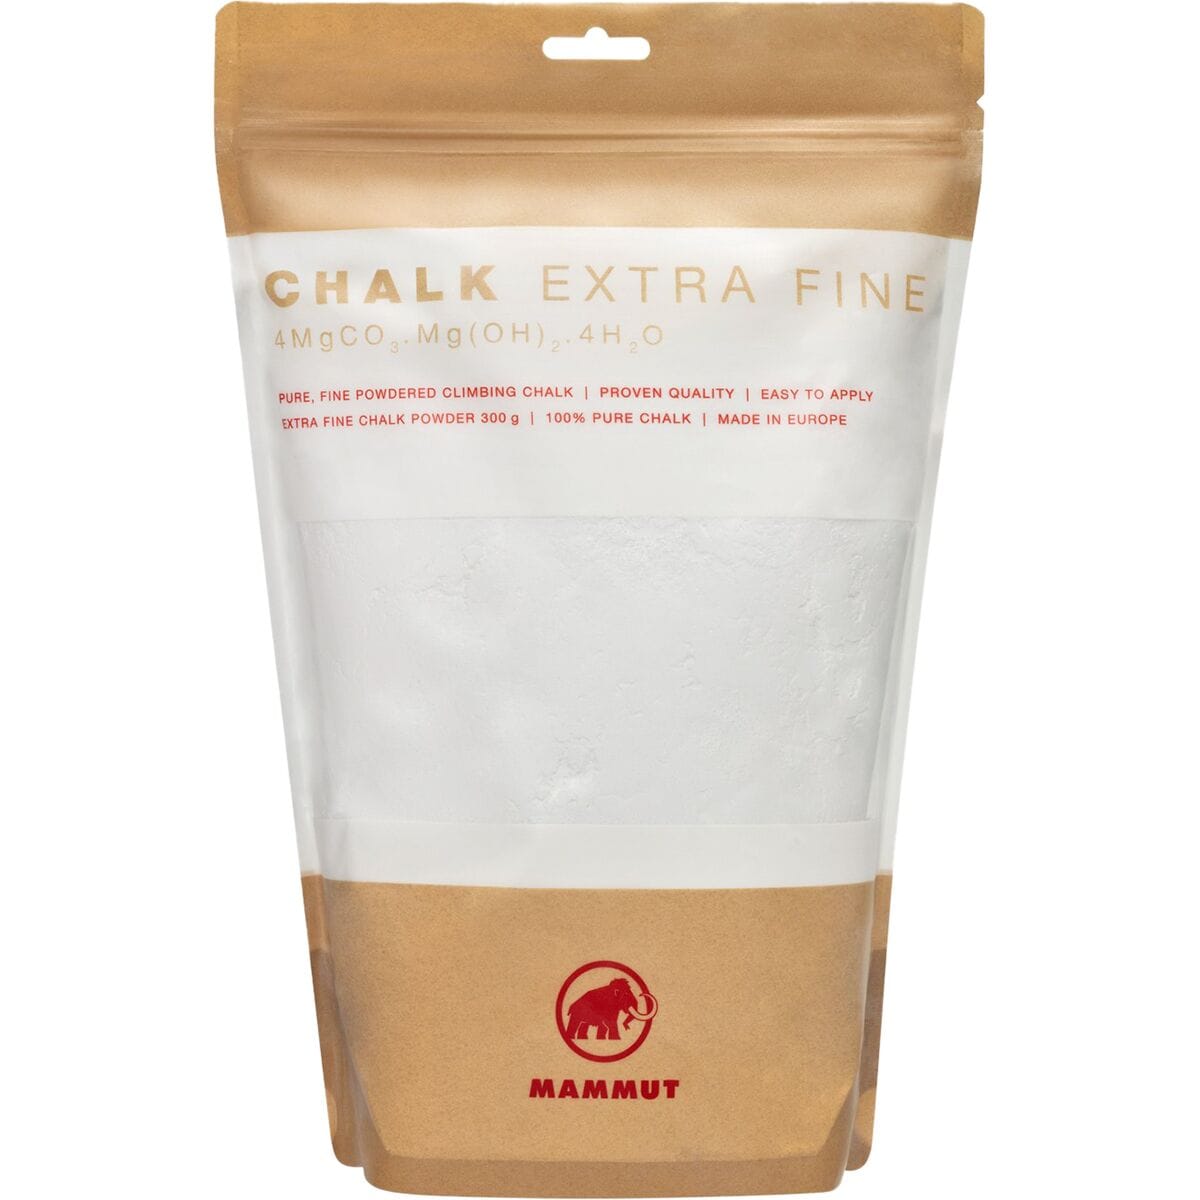 Mammut Extra Fine 300g Chalk Powder